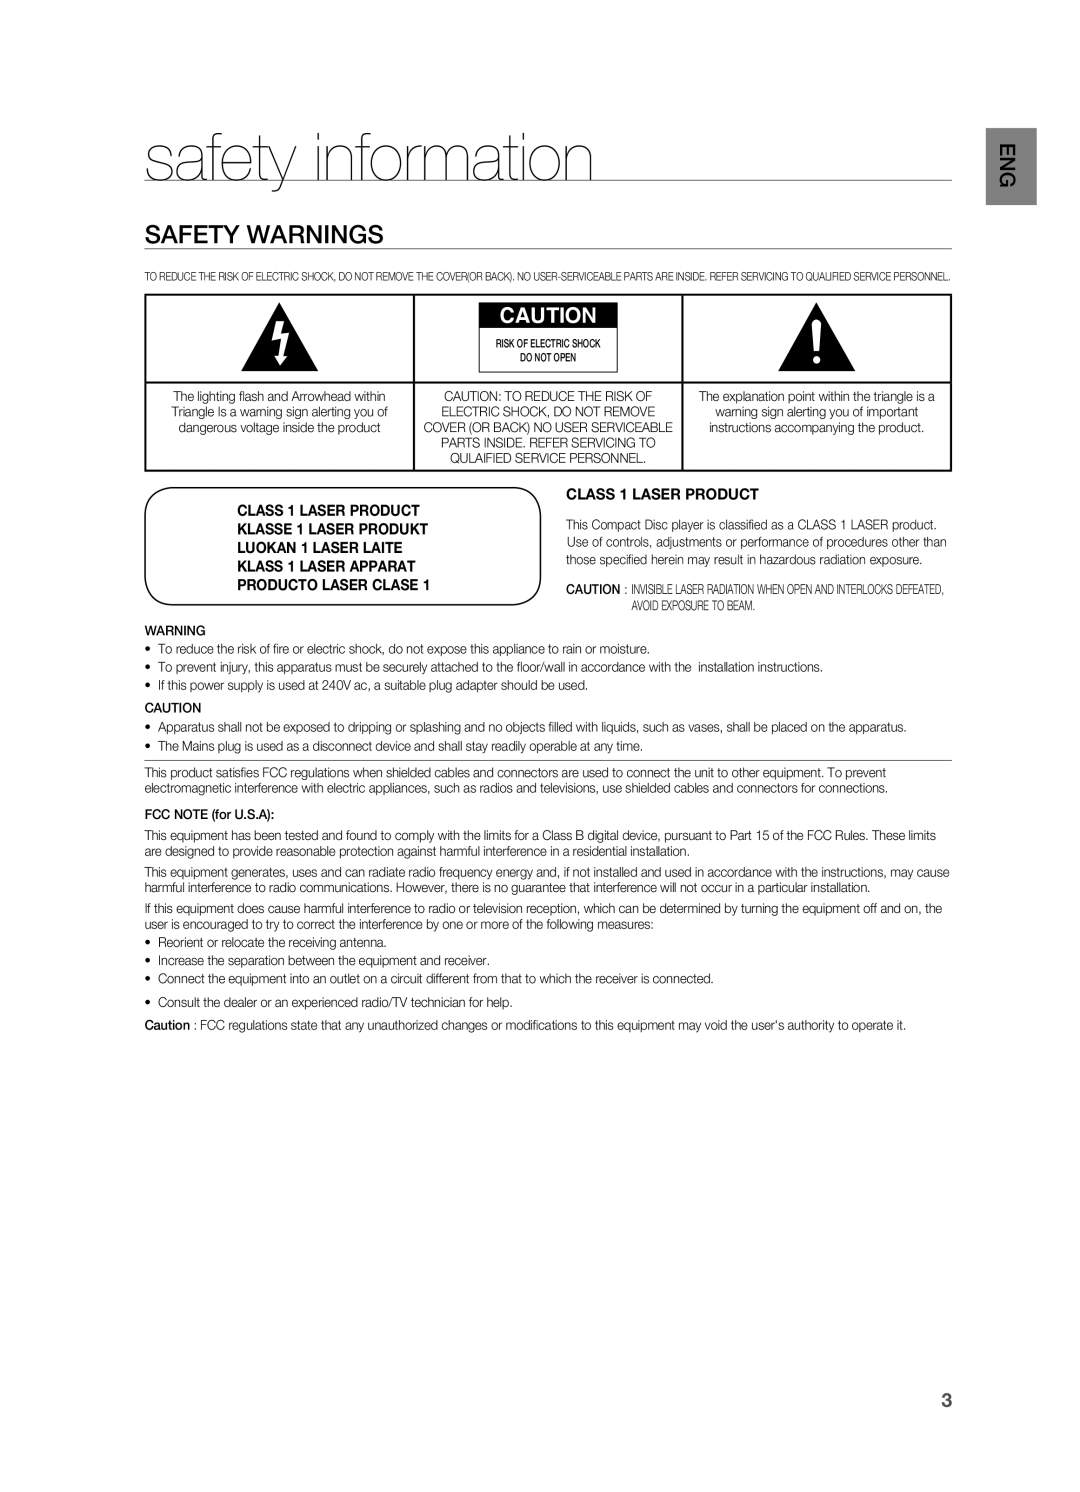 Samsung HT-Z310 safety information, Safety Warnings, CLASS 1 LASER PRODUCT KLASSE 1 LASER PRODUKT, Producto Laser Clase 